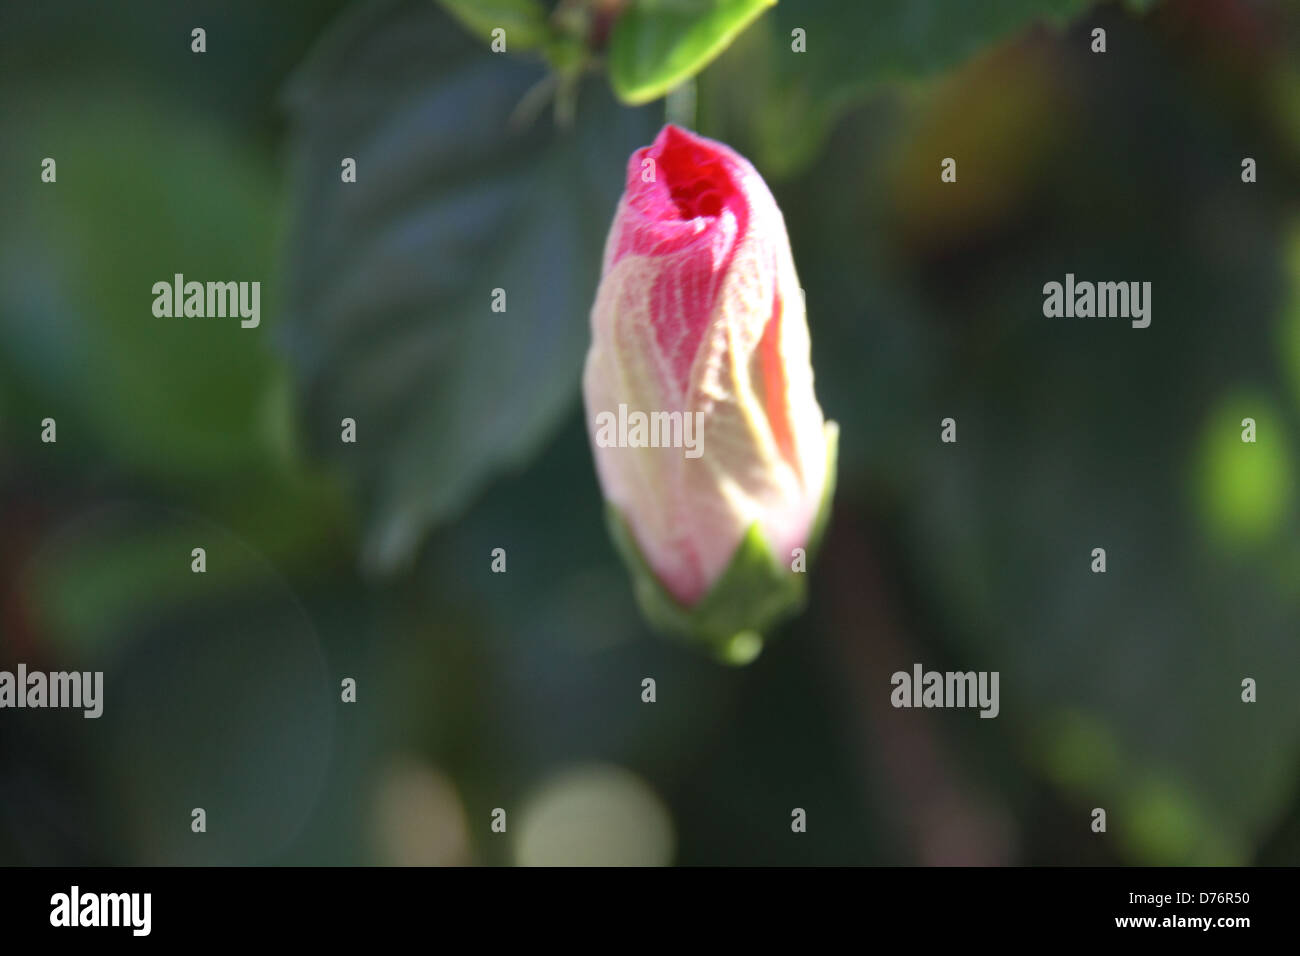 Chiuso Bud di ibisco rosa (Hibiscus Rosa-Sinensis) Foto Stock